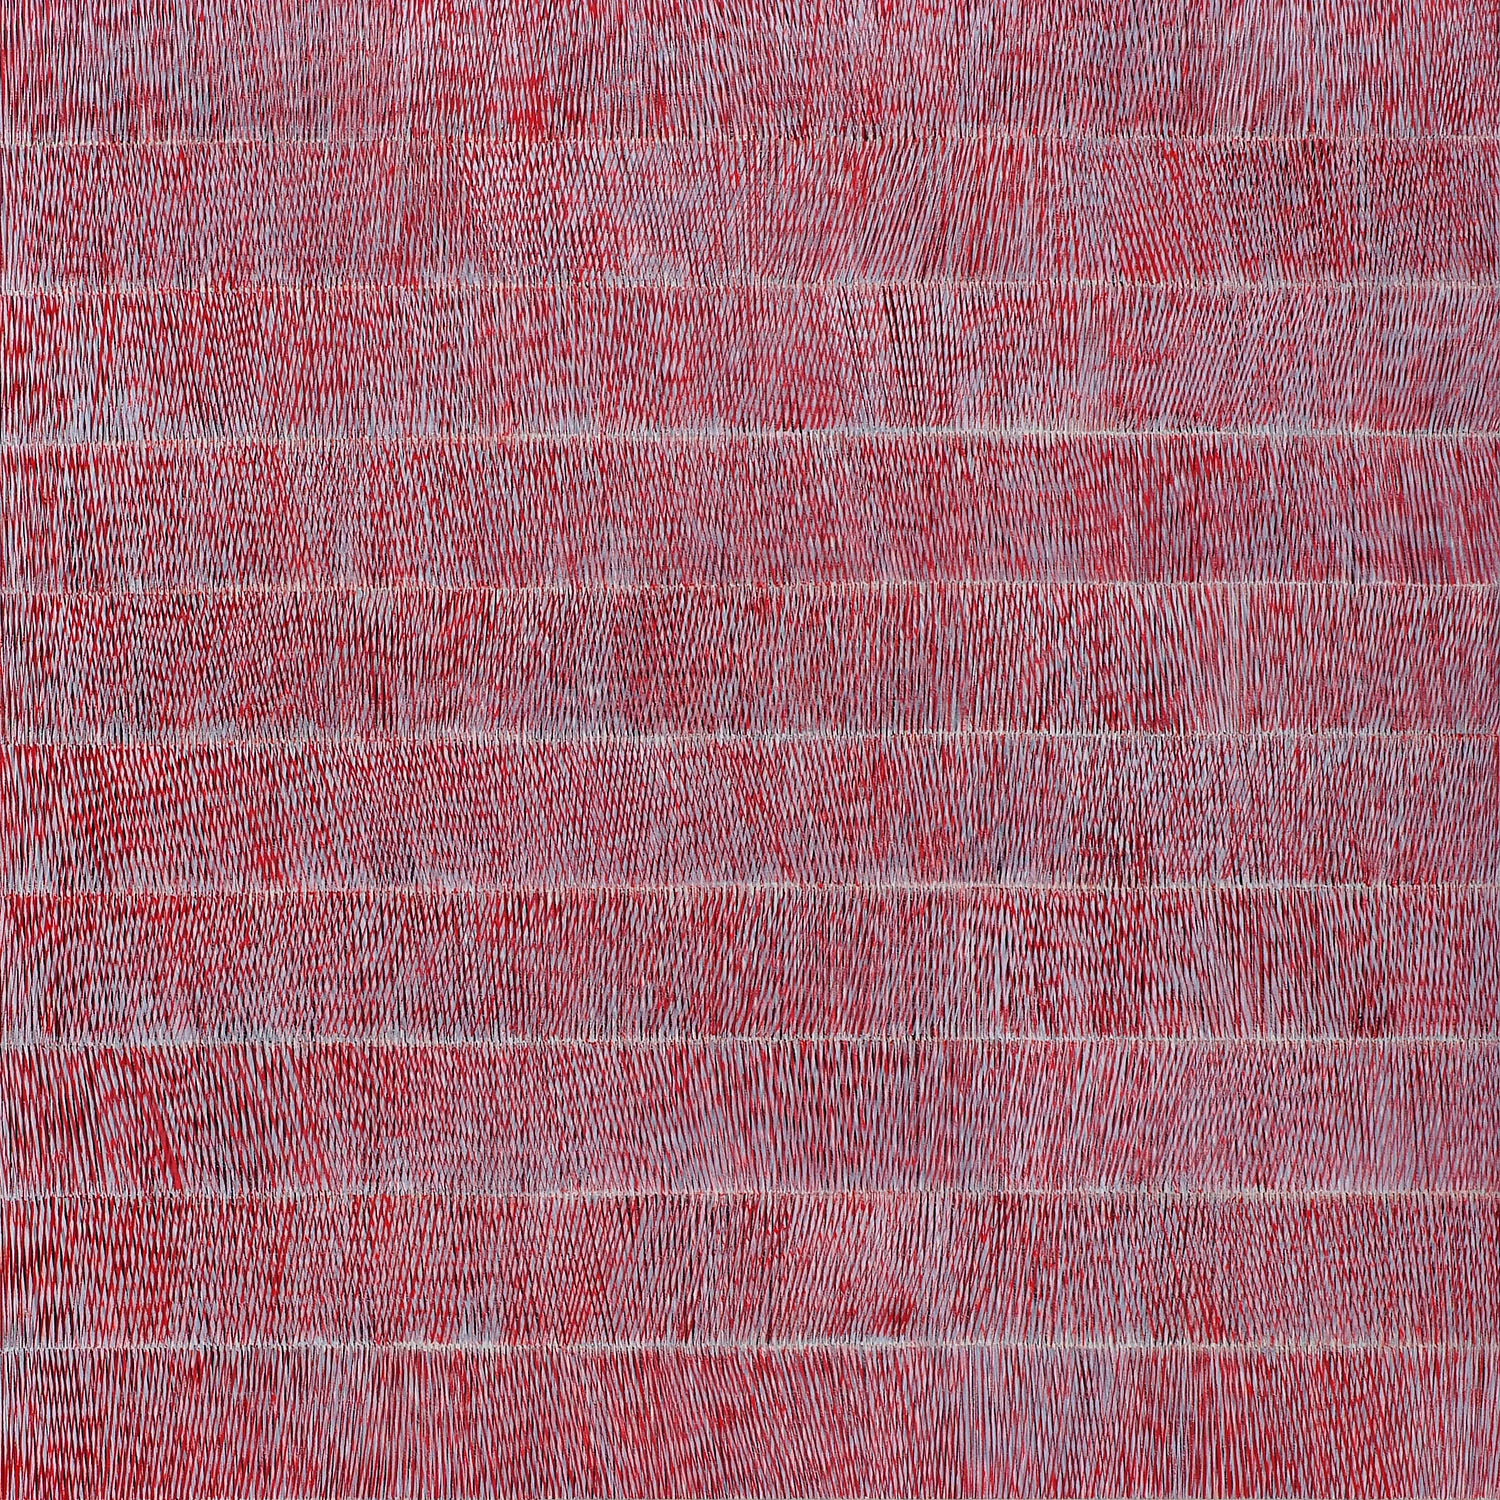 Nikola Dimitrov, Cassandra II/III, 2011, 250 x 250 cm, Pigmente, Bindemittel, Lösungsmittel auf Leinwand